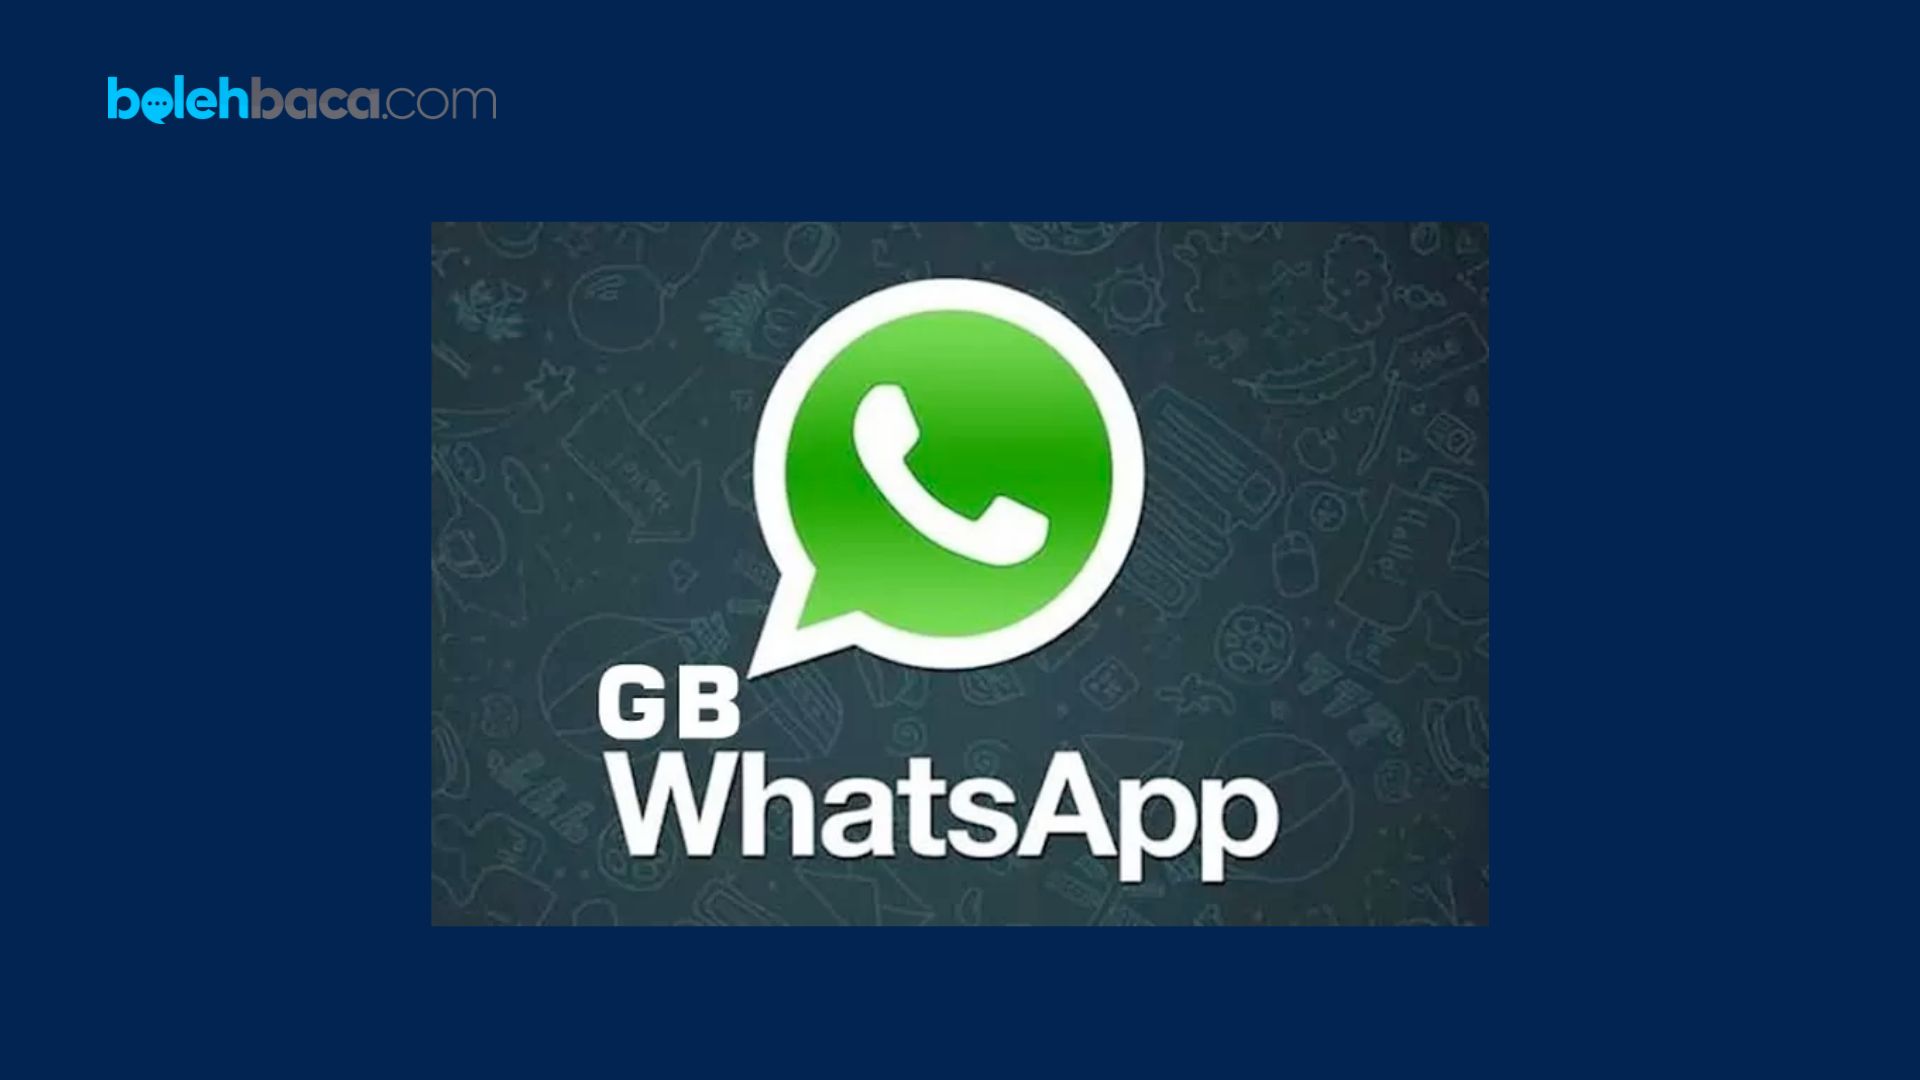 Aplikasi whatsapp gb